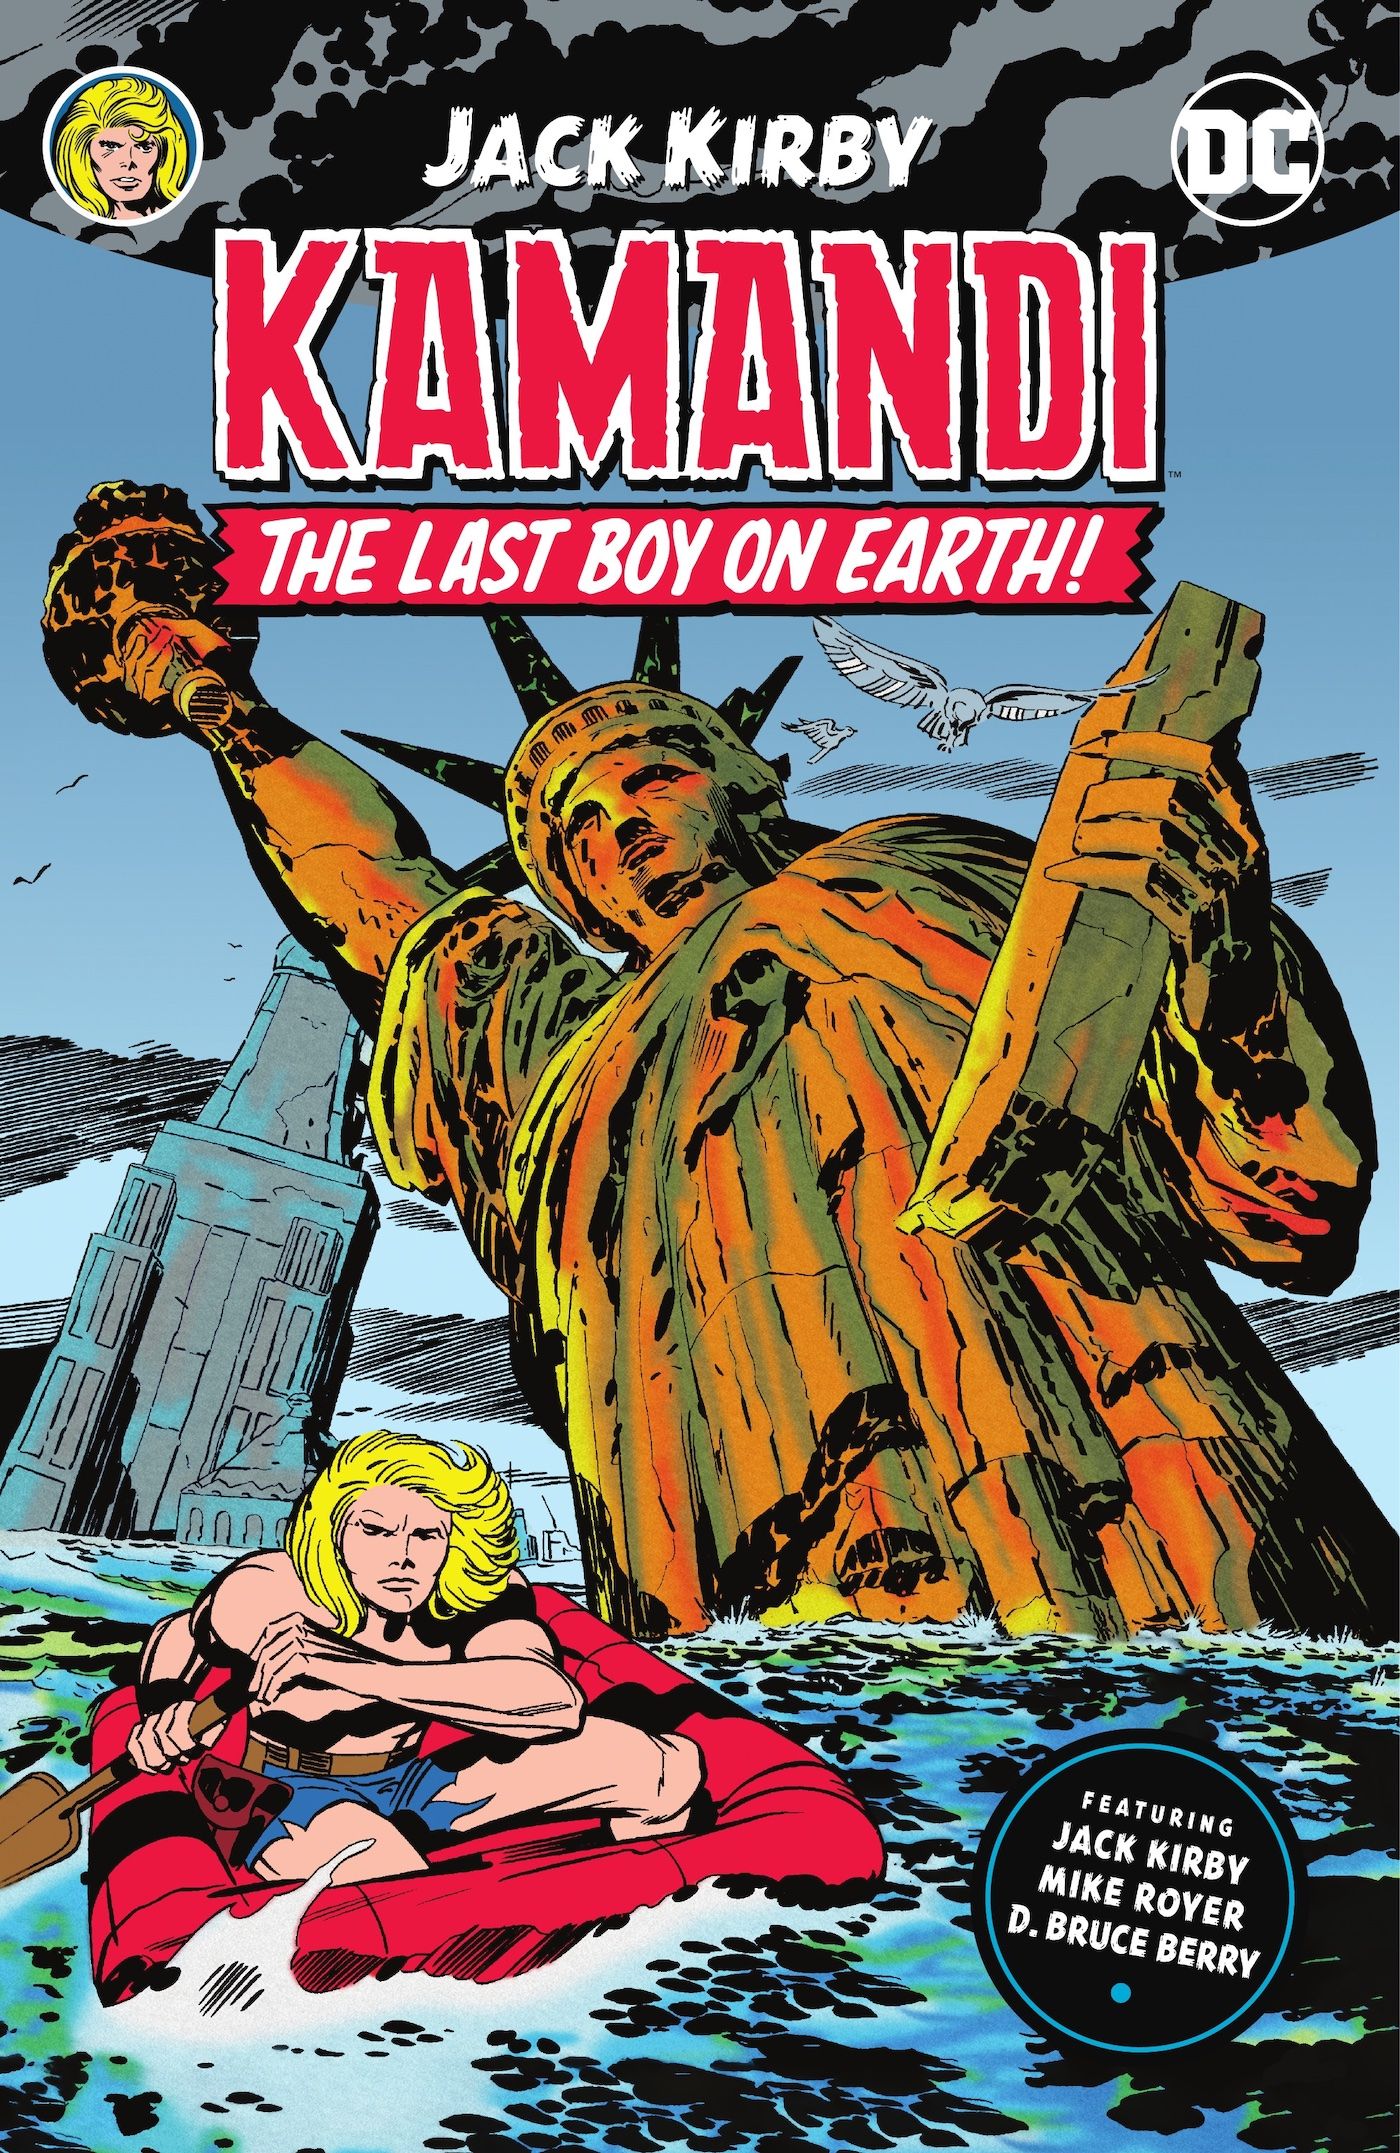 Jack Kirby's Kamandi the Last Boy on Earth cover